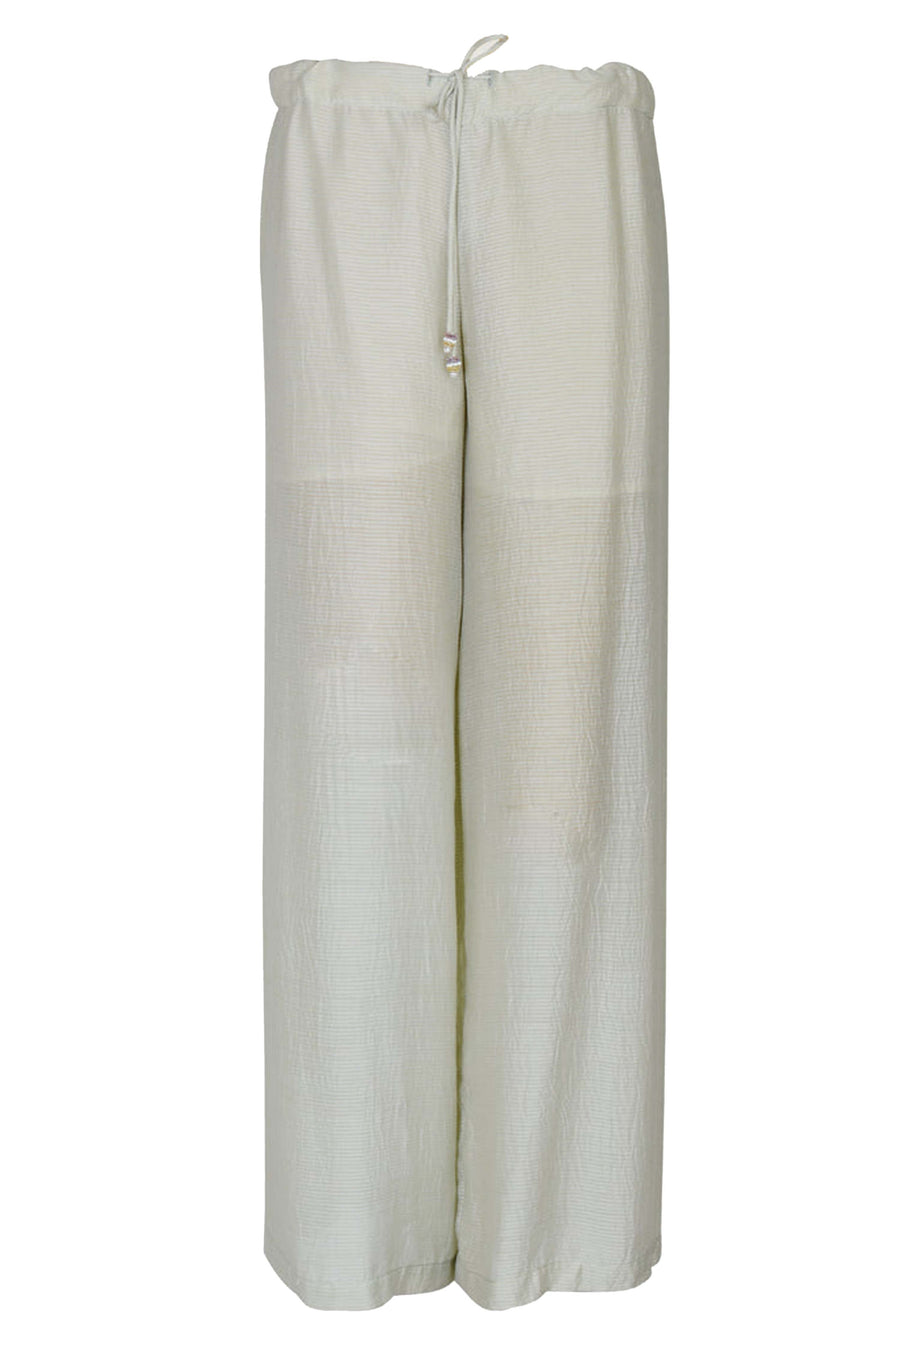 Shiya Silk Cotton Draw String Jogger Style Pants (6184057897156)